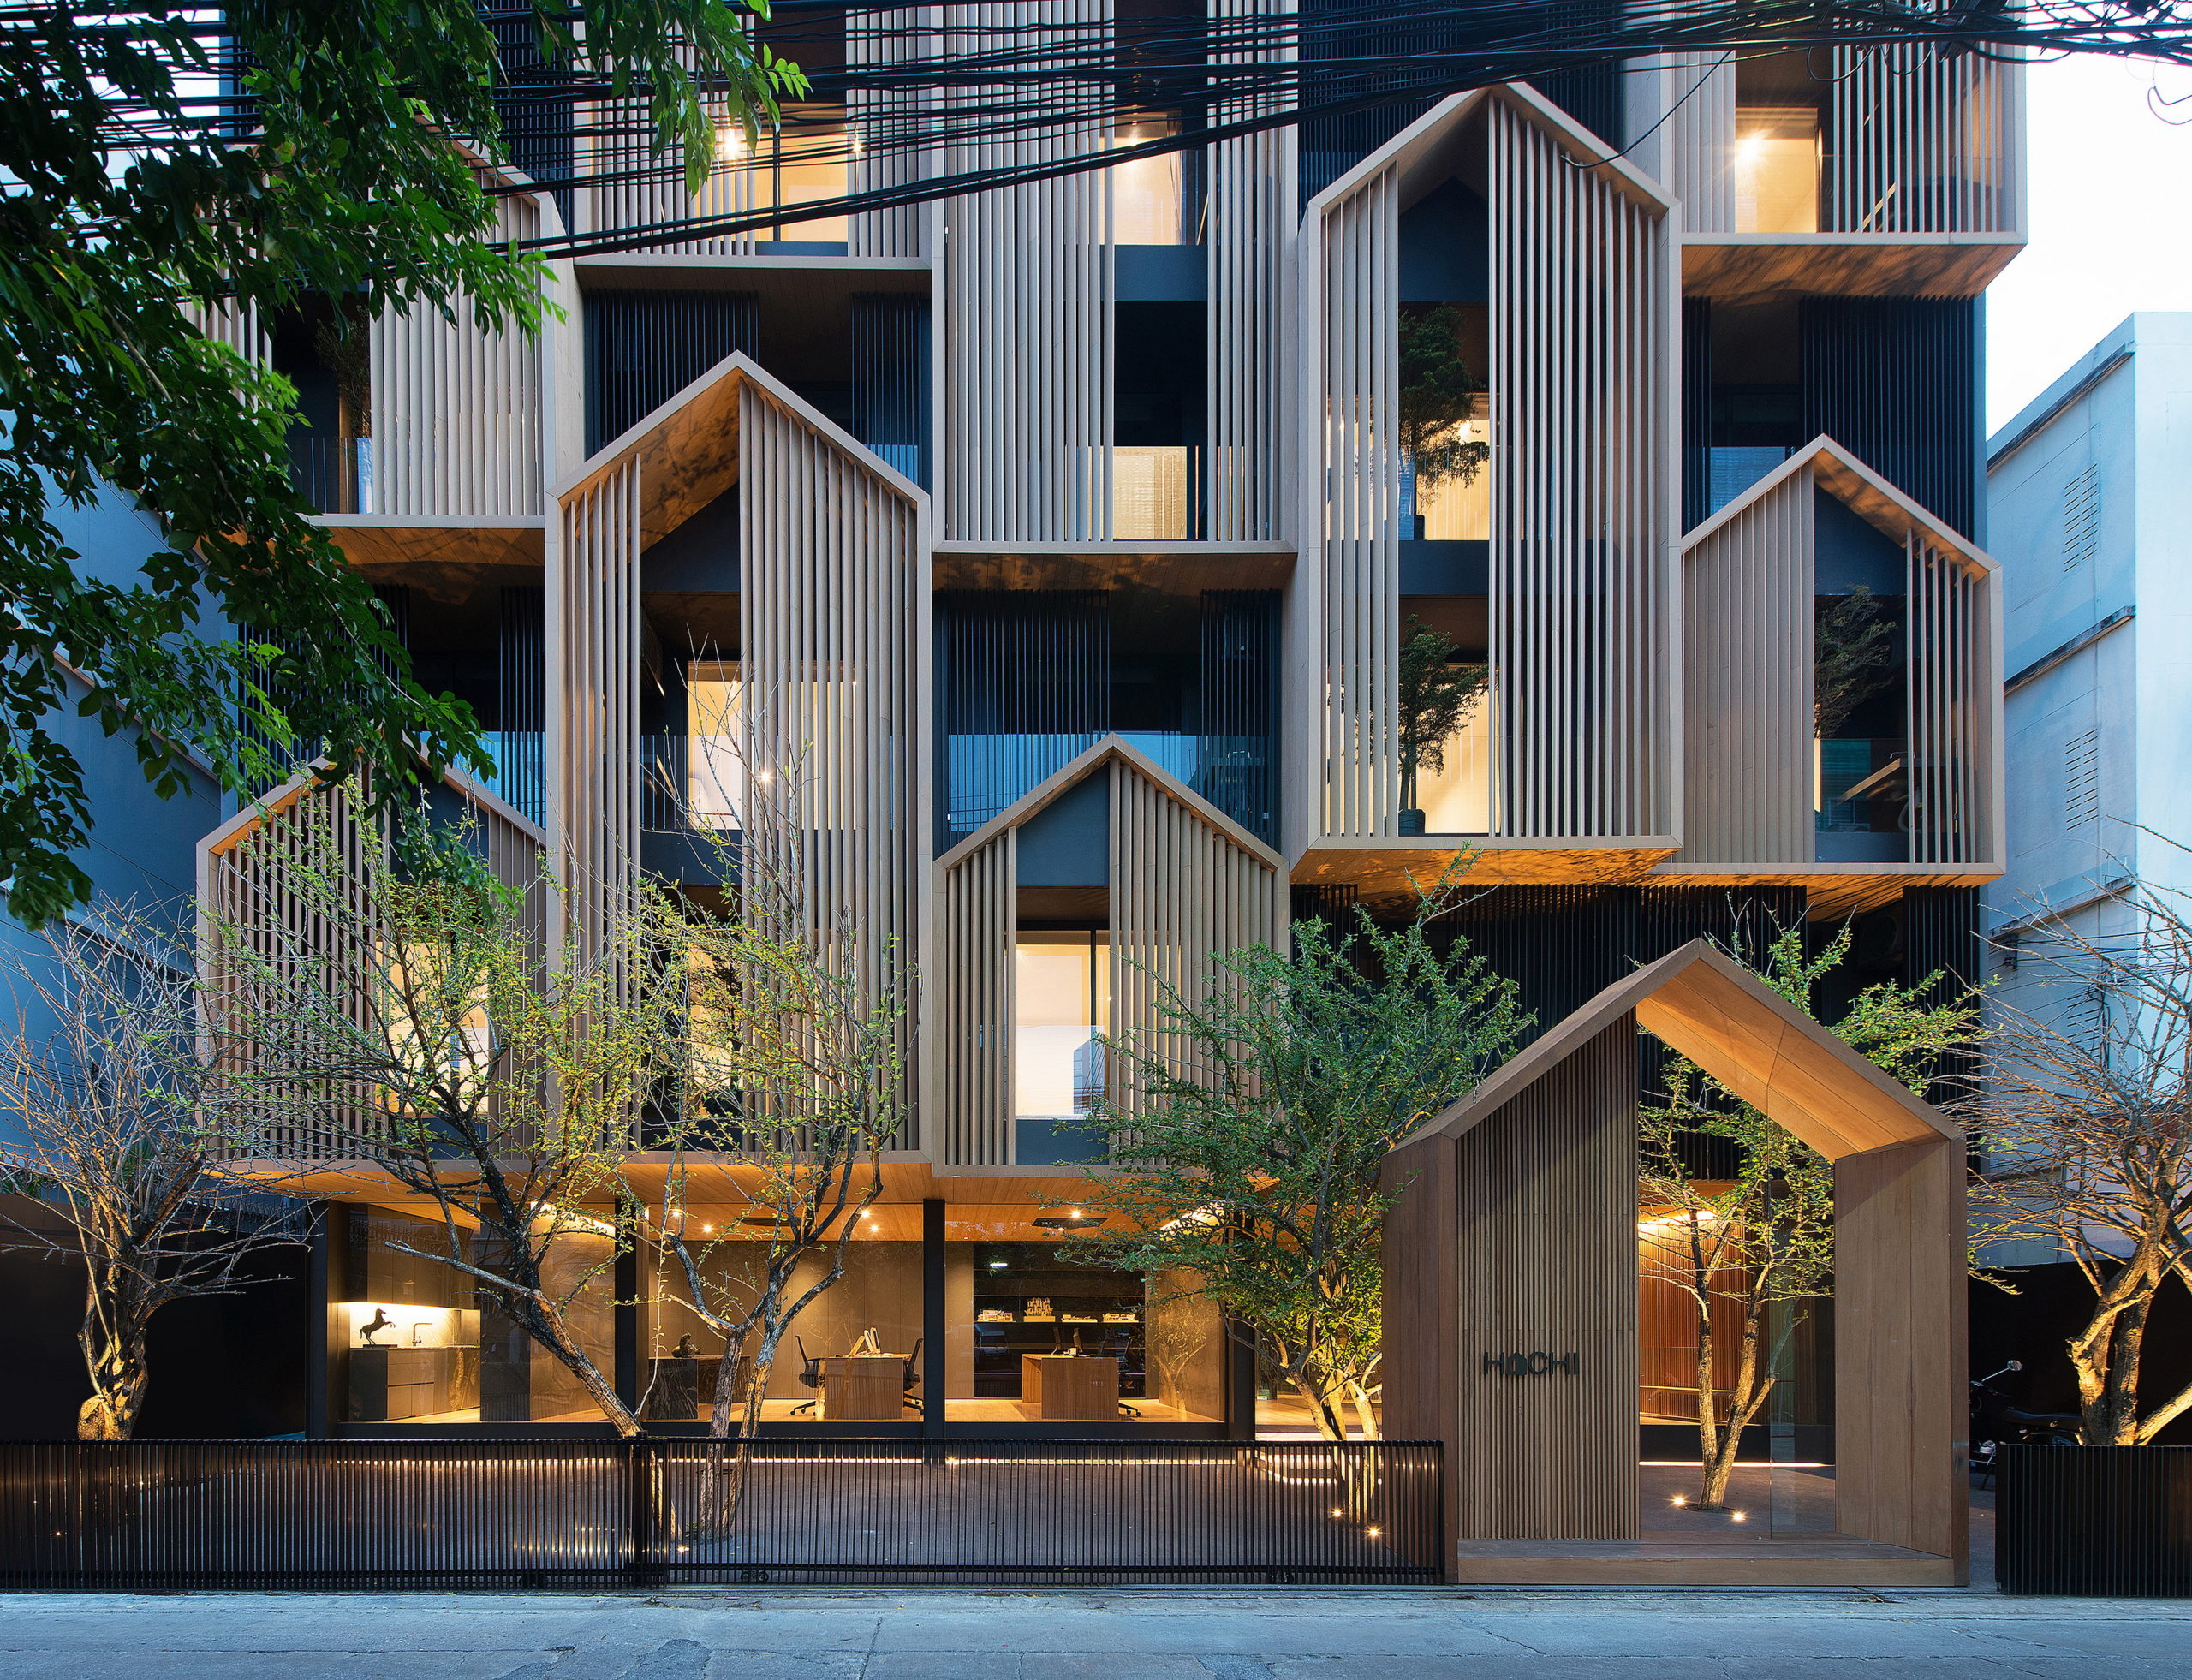 Hachi Serviced Apartment by Octane Architect & Design, Bangkok, Thailand